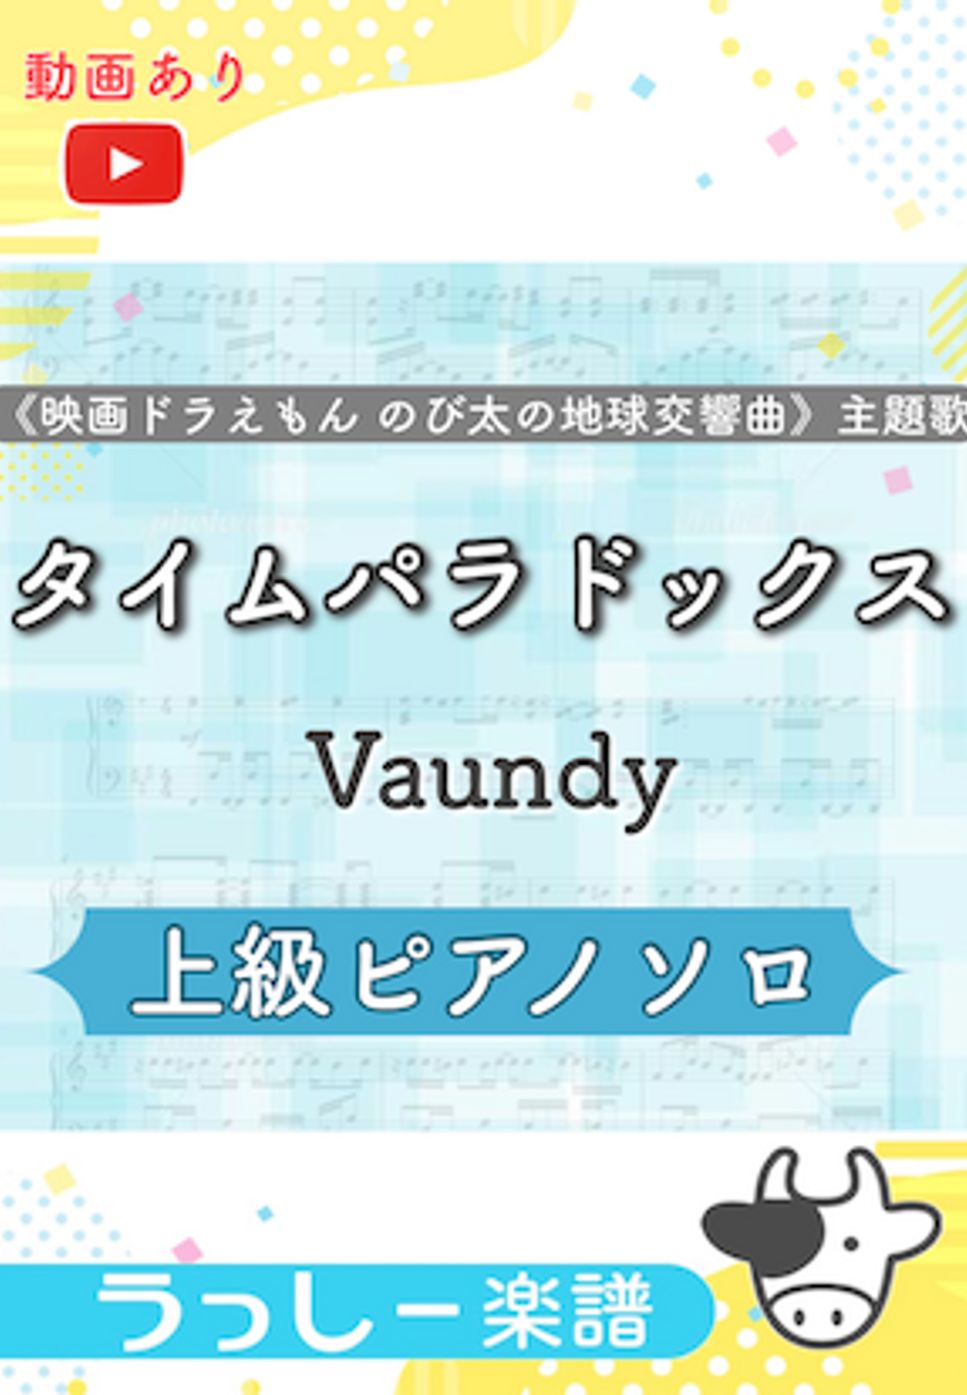 Vaundy - タイムパラドックス (『映画ドラえもん のび太の地球交響曲』主題歌) by 牛武奏人